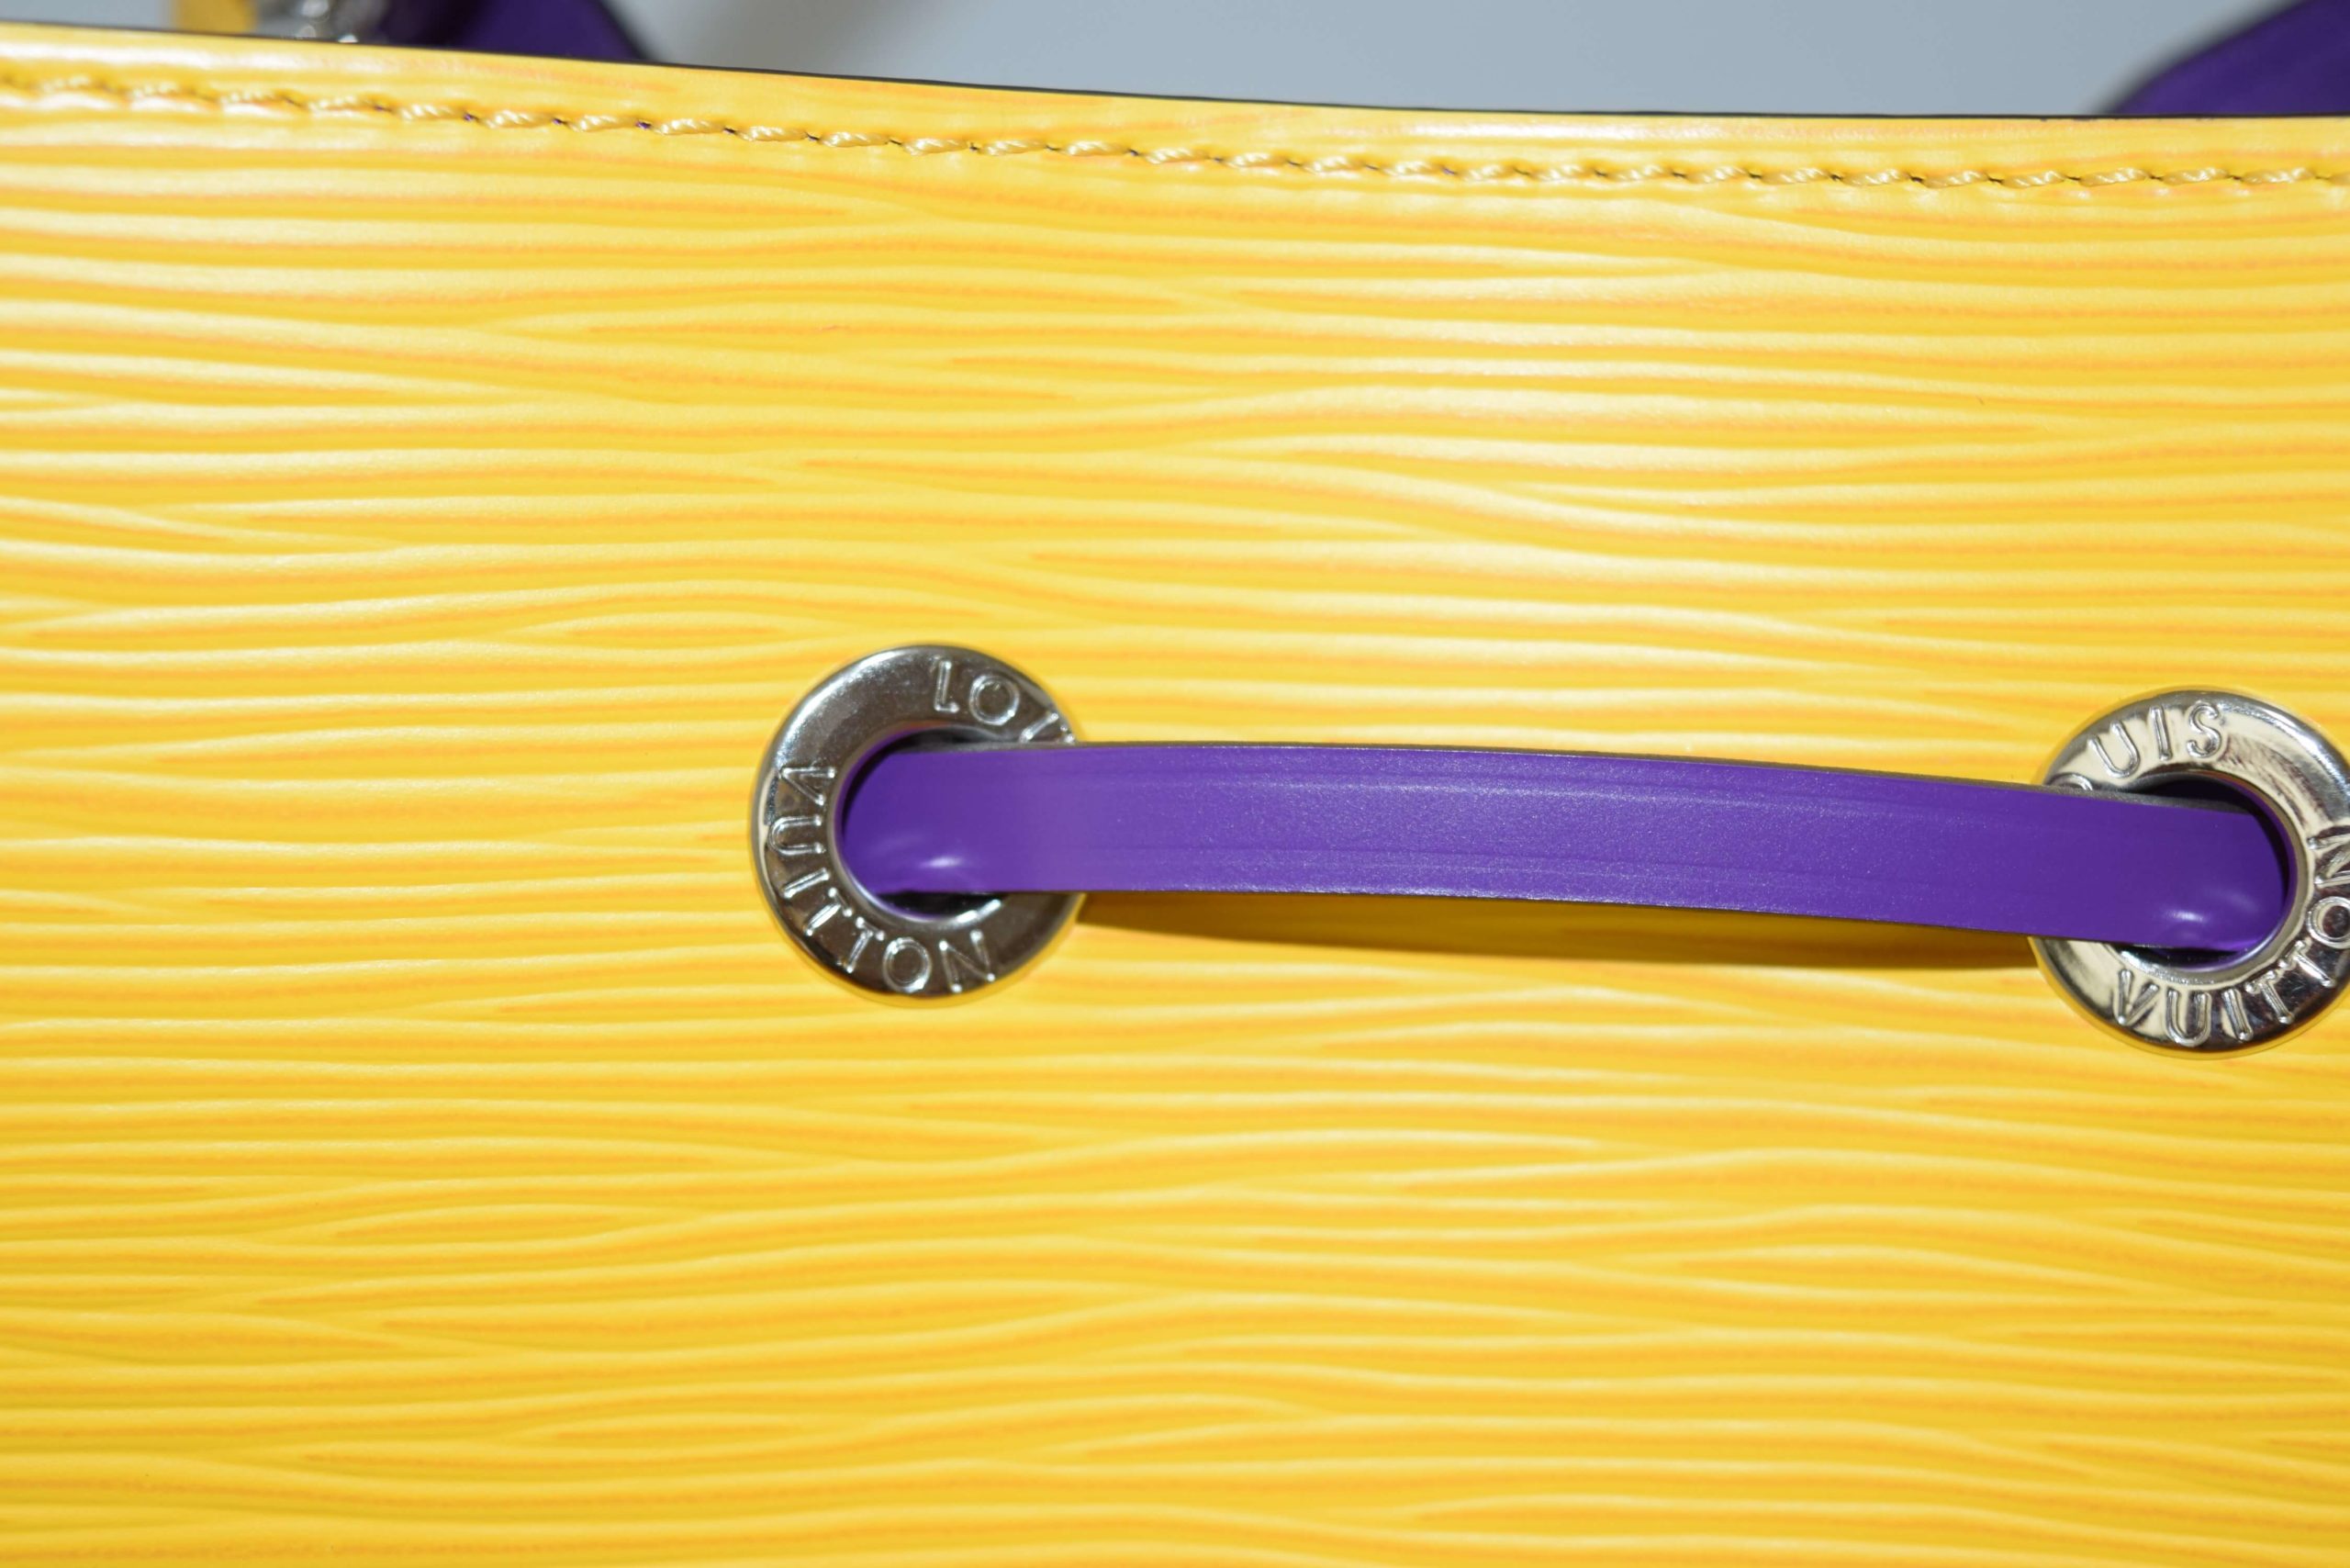 yellow and purple louis vuittons handbags